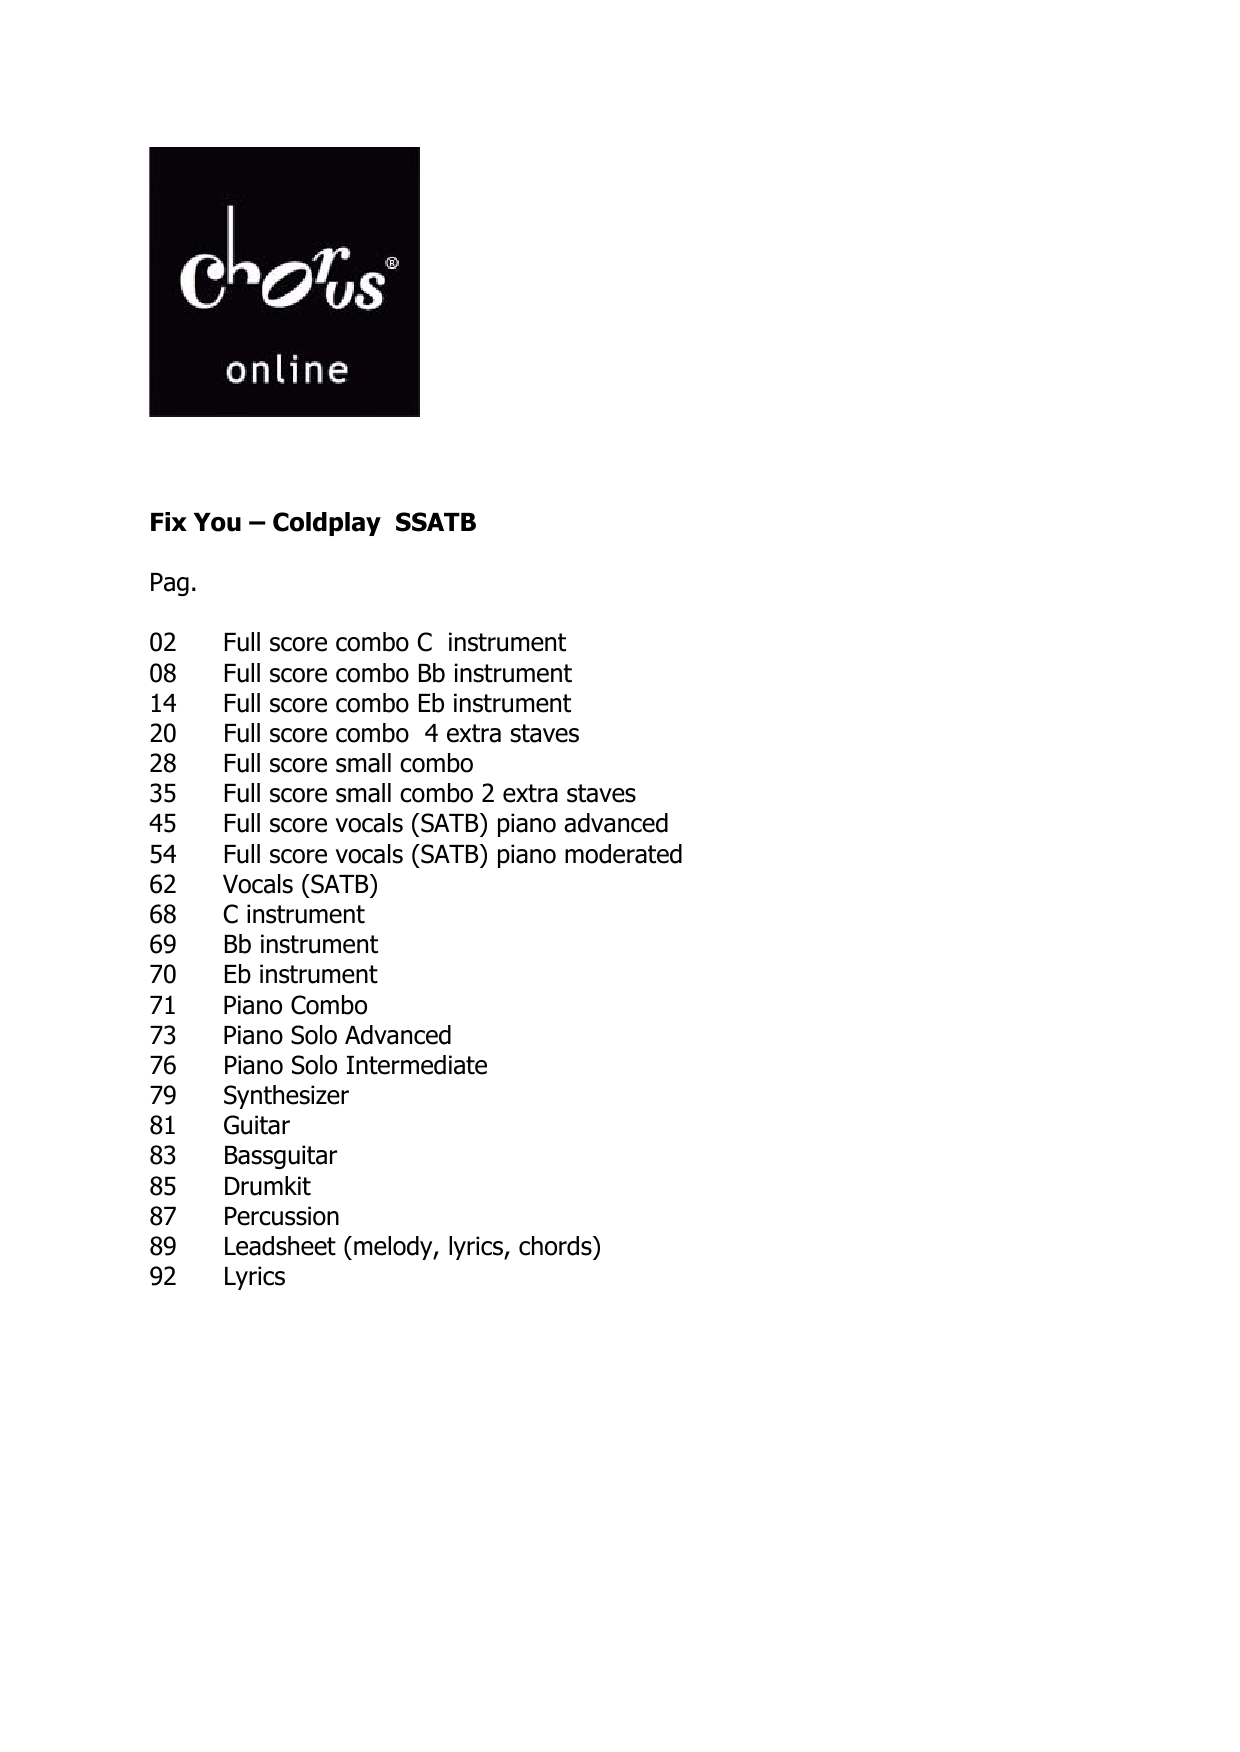 Coldplay Fix You (arr. Peter van Lonkhuijsen) sheet music notes printable PDF score